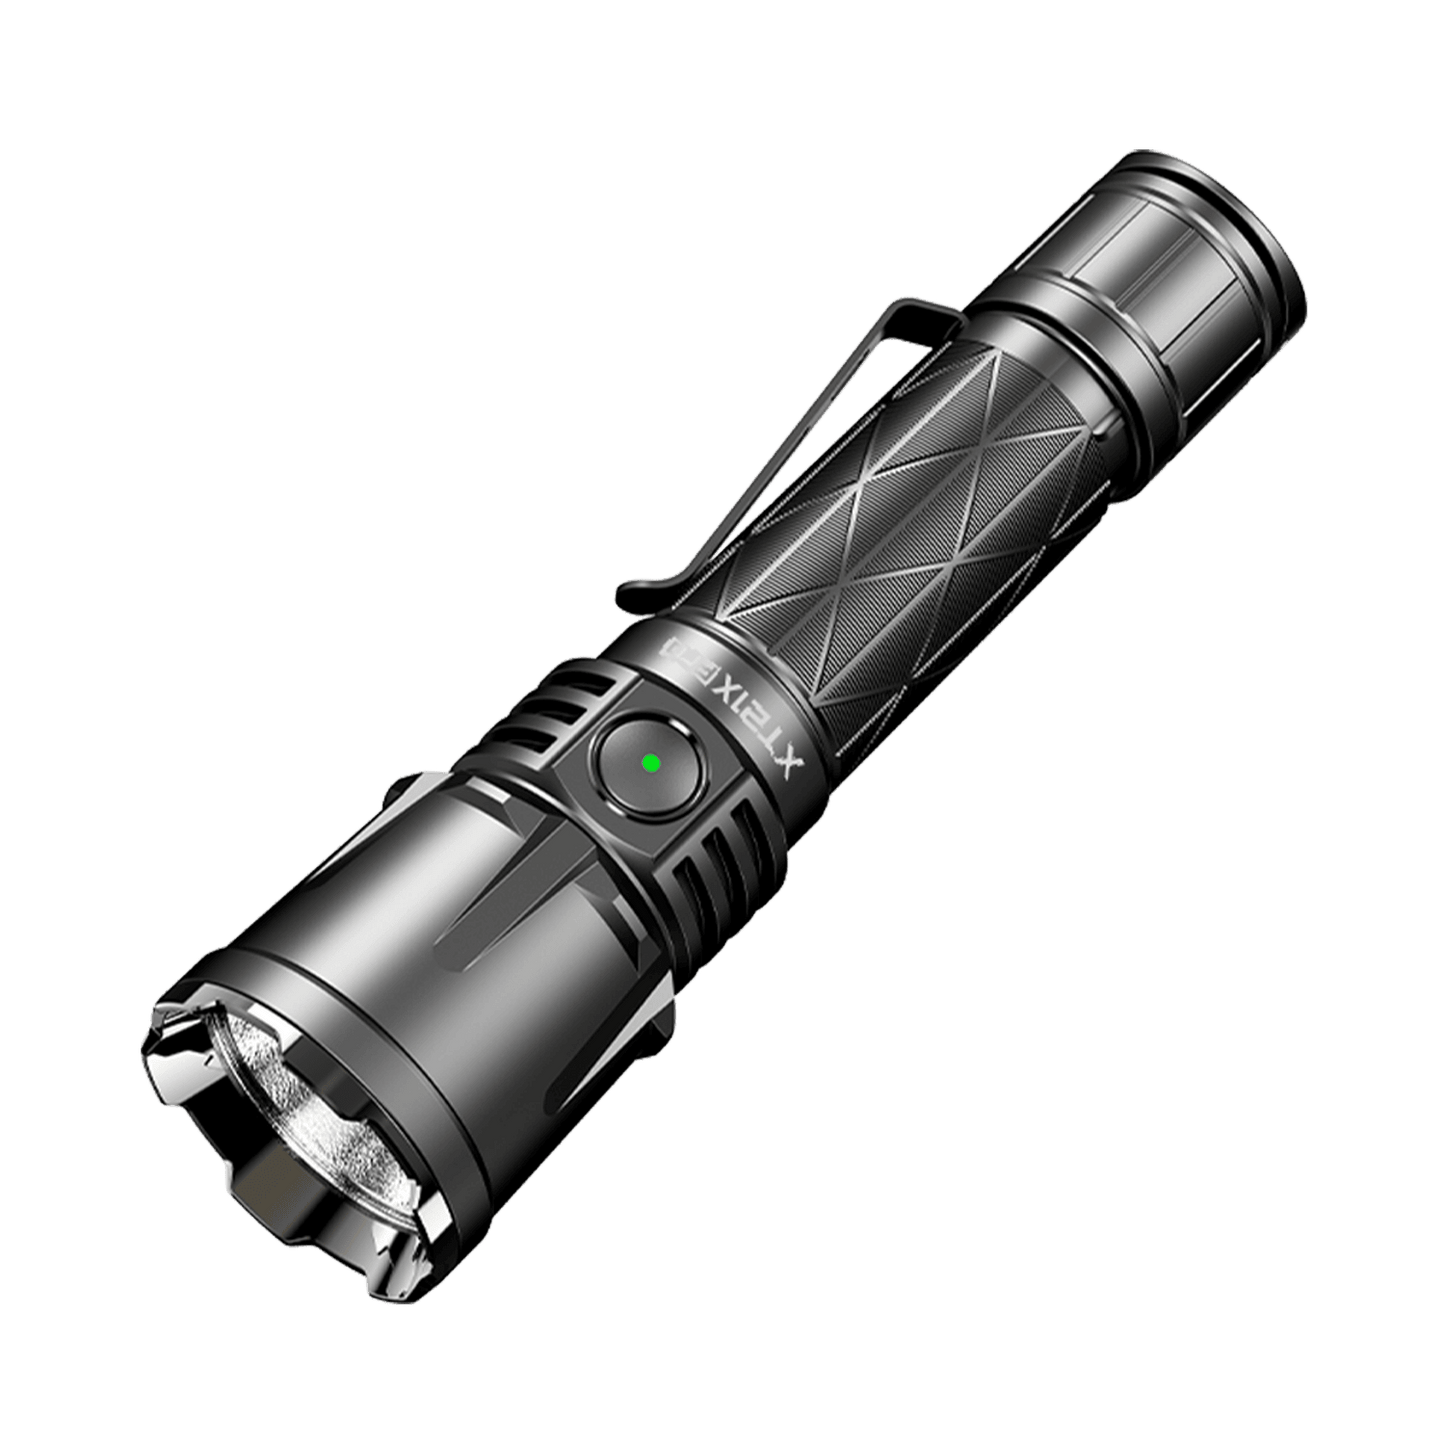 Klarus XT21X Pro Tactical Flashlight - 4 400 lumen